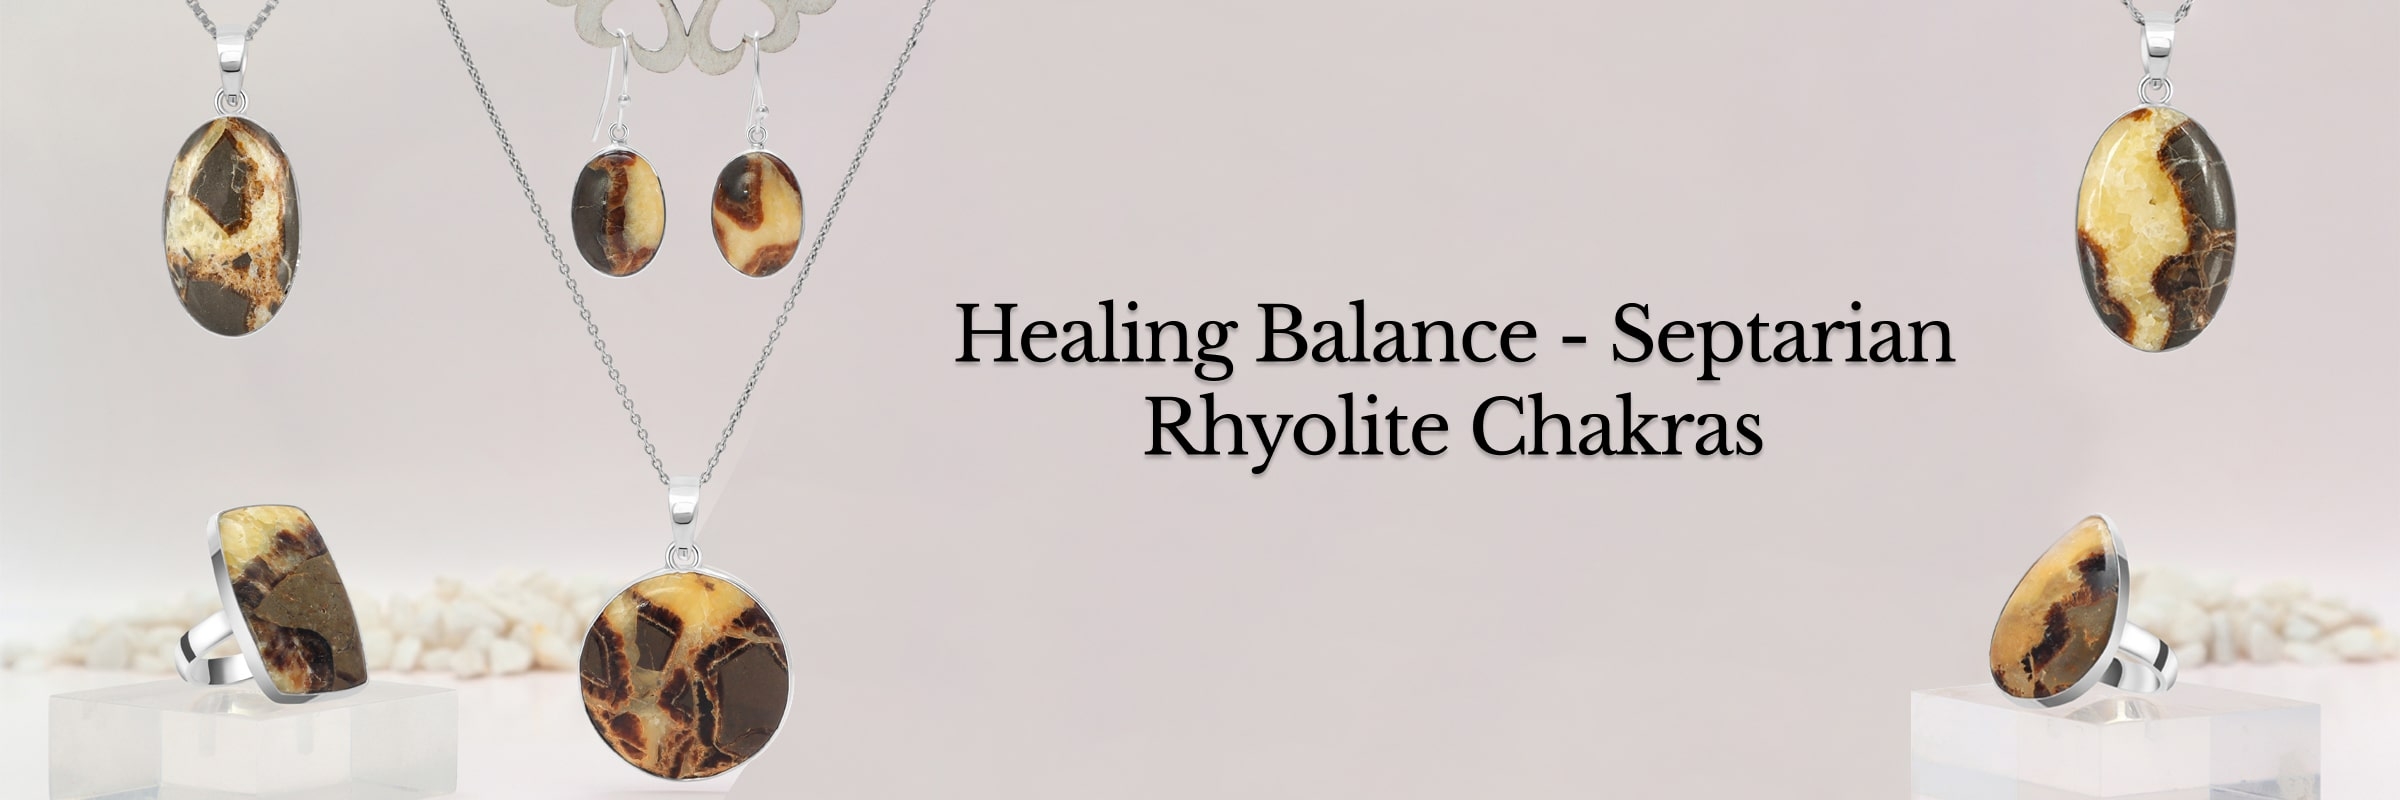 Septarian Rhyolite Chakra Healing